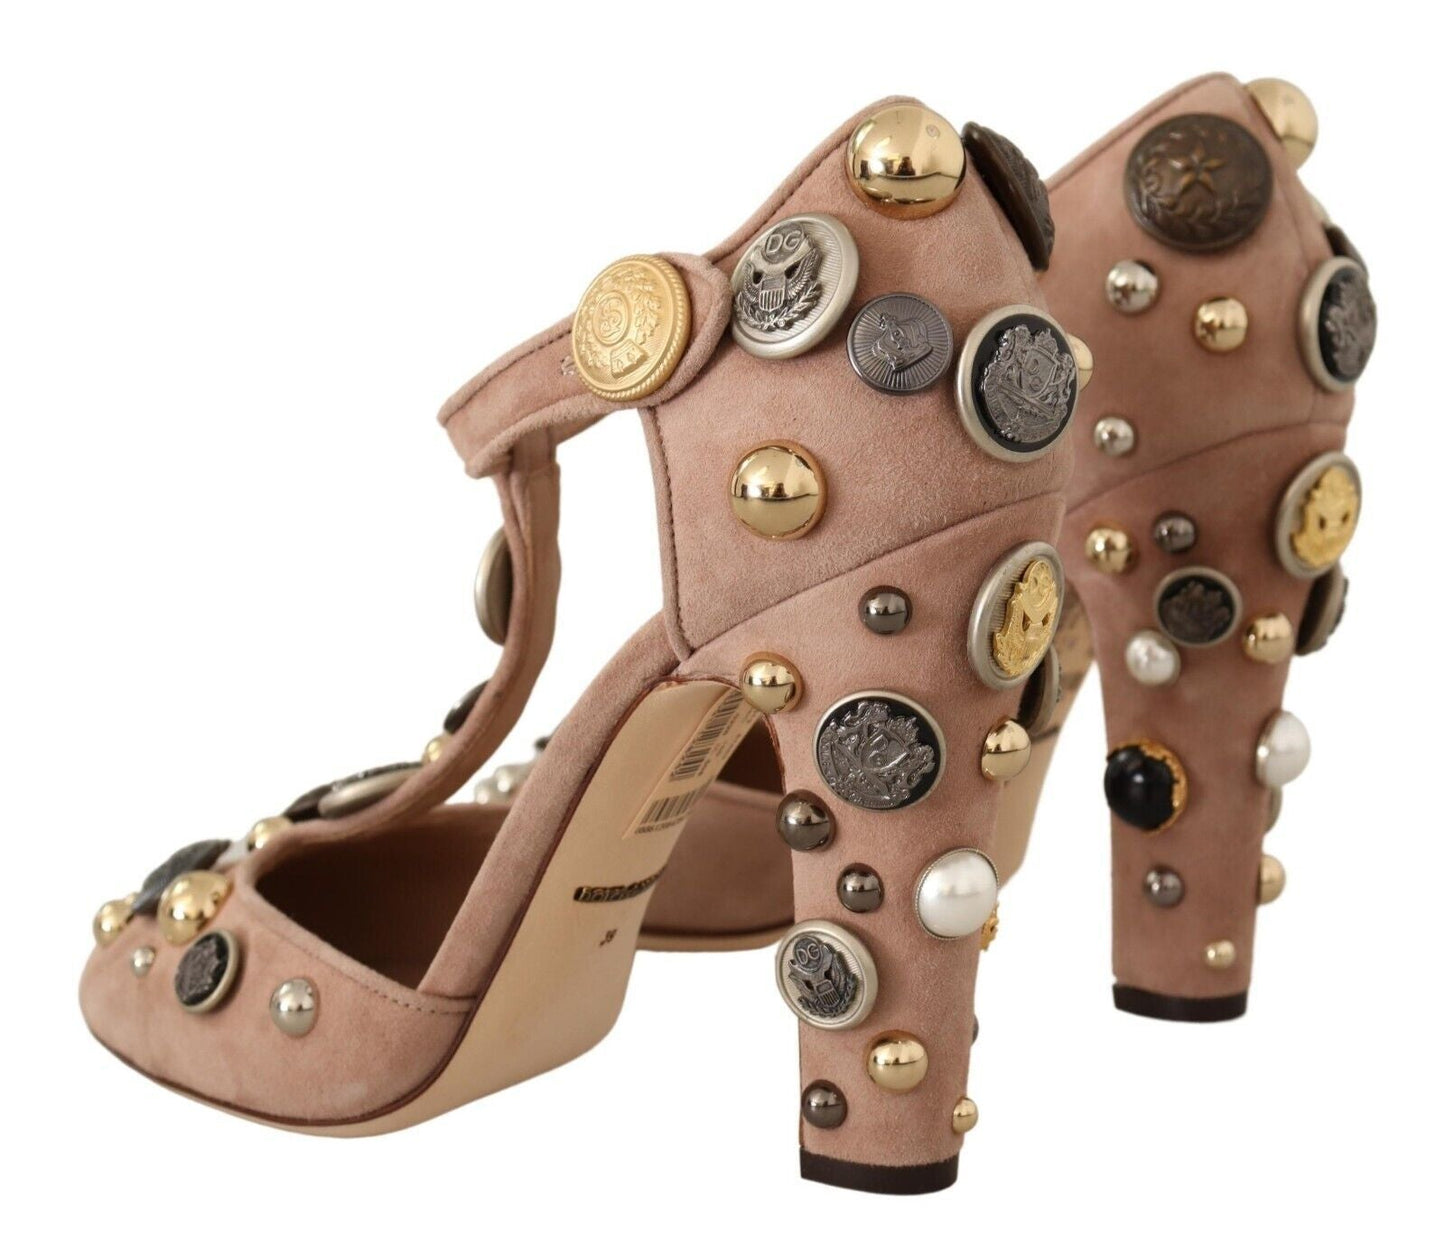 Dolce & Gabbana Pink Suede Embellished T-strap Pumps Shoes | Fashionsarah.com